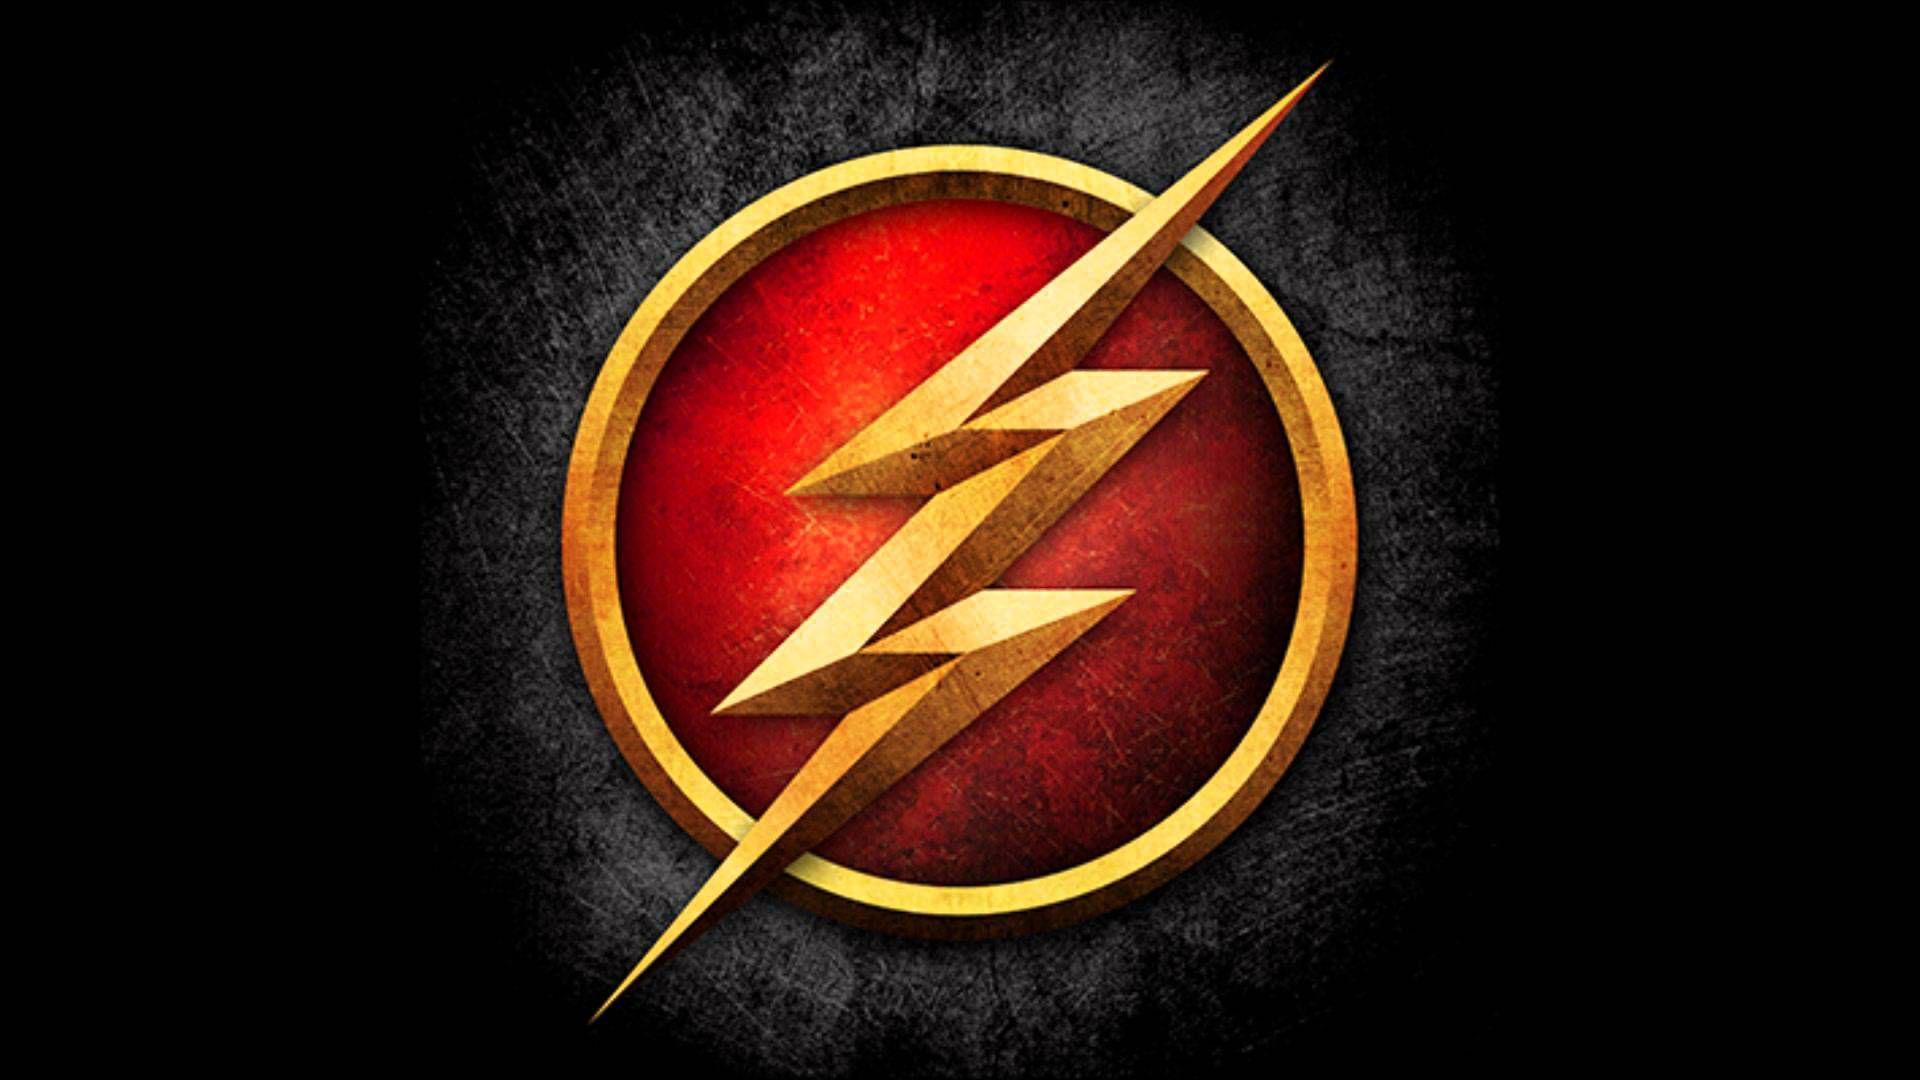 Flsh Logo - The Flash Logo Wallpapers - Wallpaper Cave